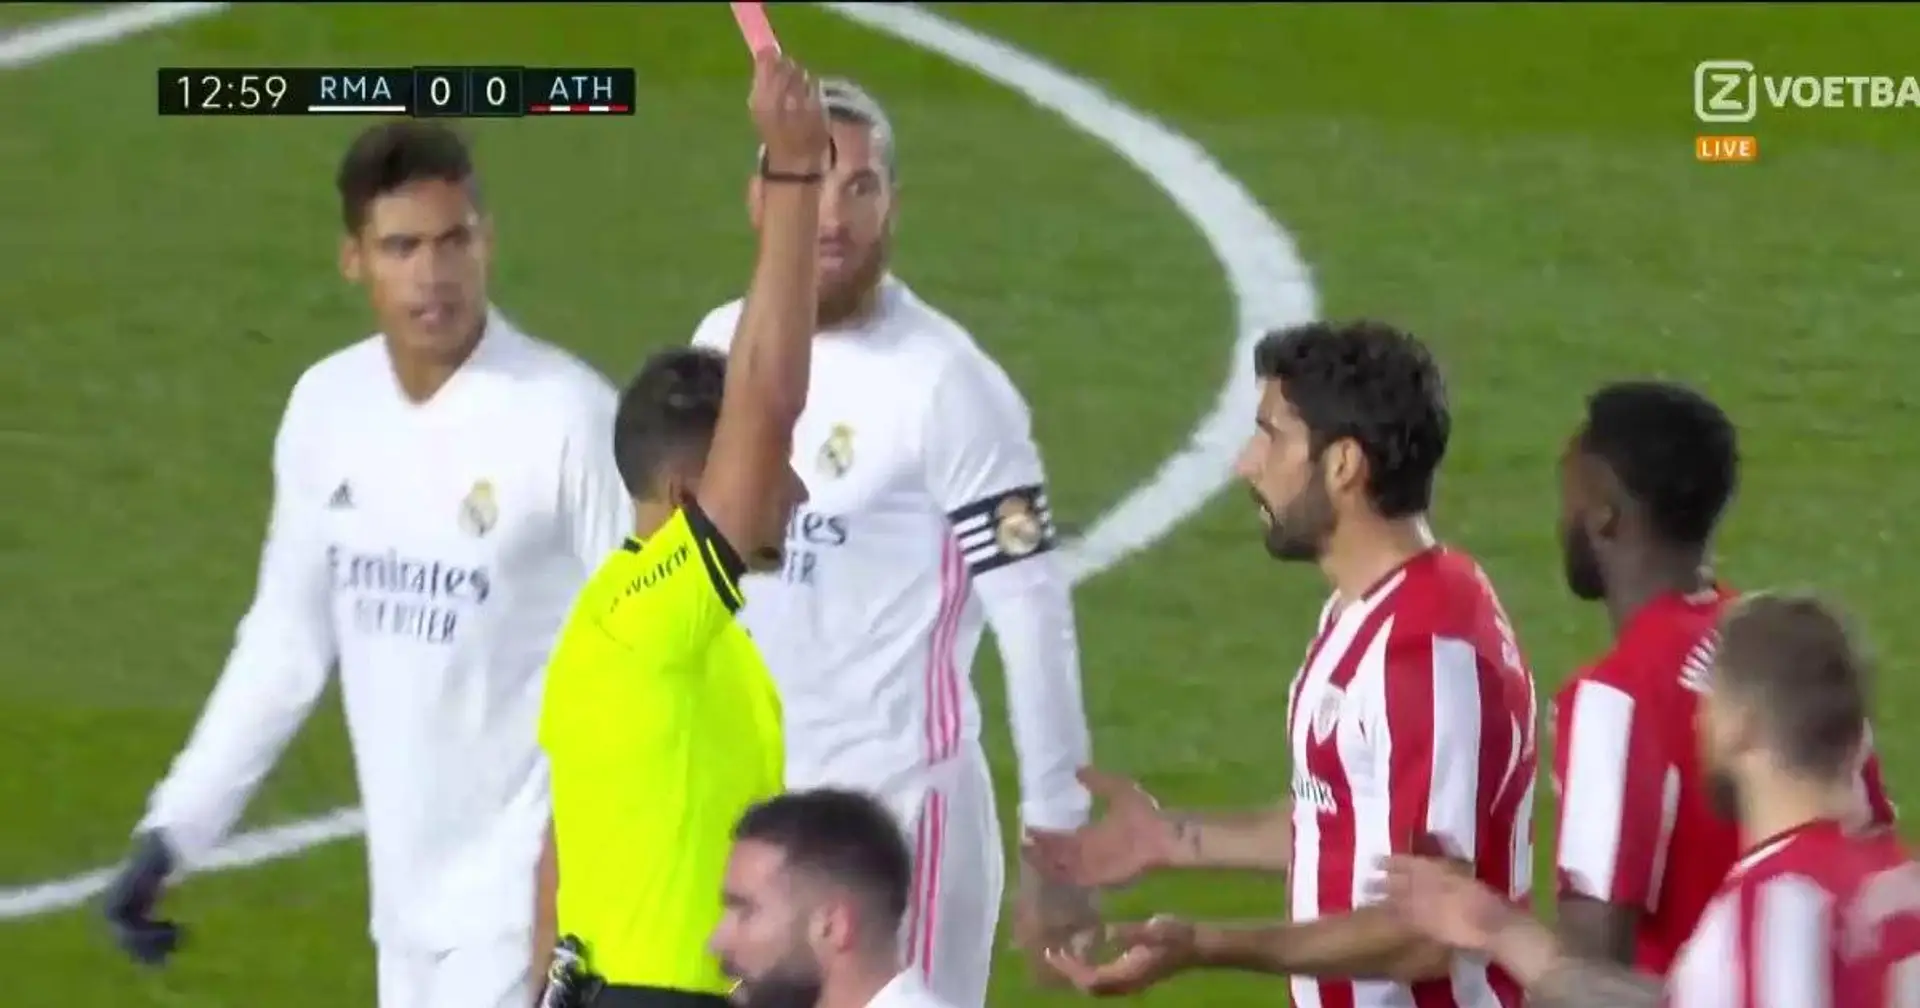 "Clown absolu'': les fans de Madrid troll Raul Garcia qui est expulsé à la 13e minute après 2 tentatives de tuer Kroos